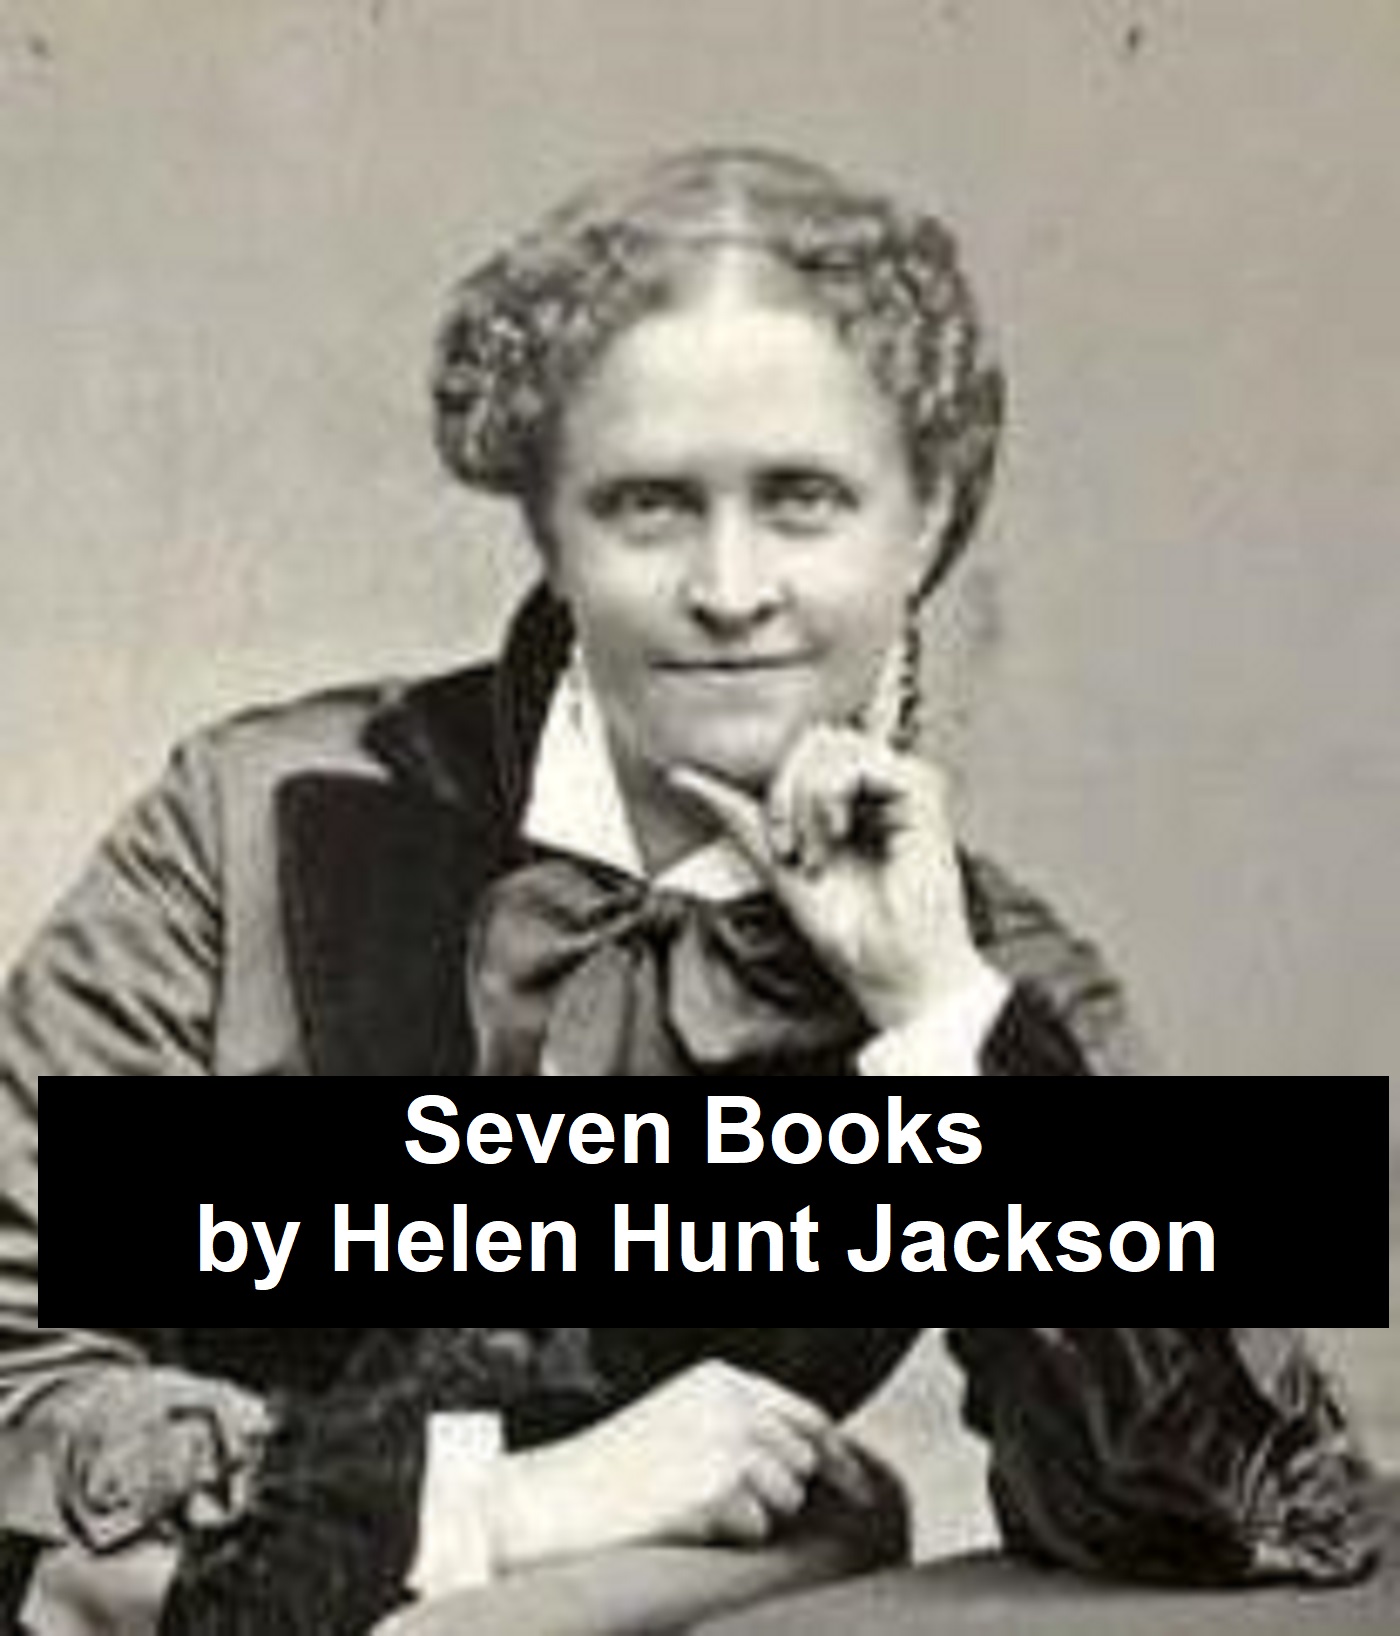 Helen Hunt Jackson